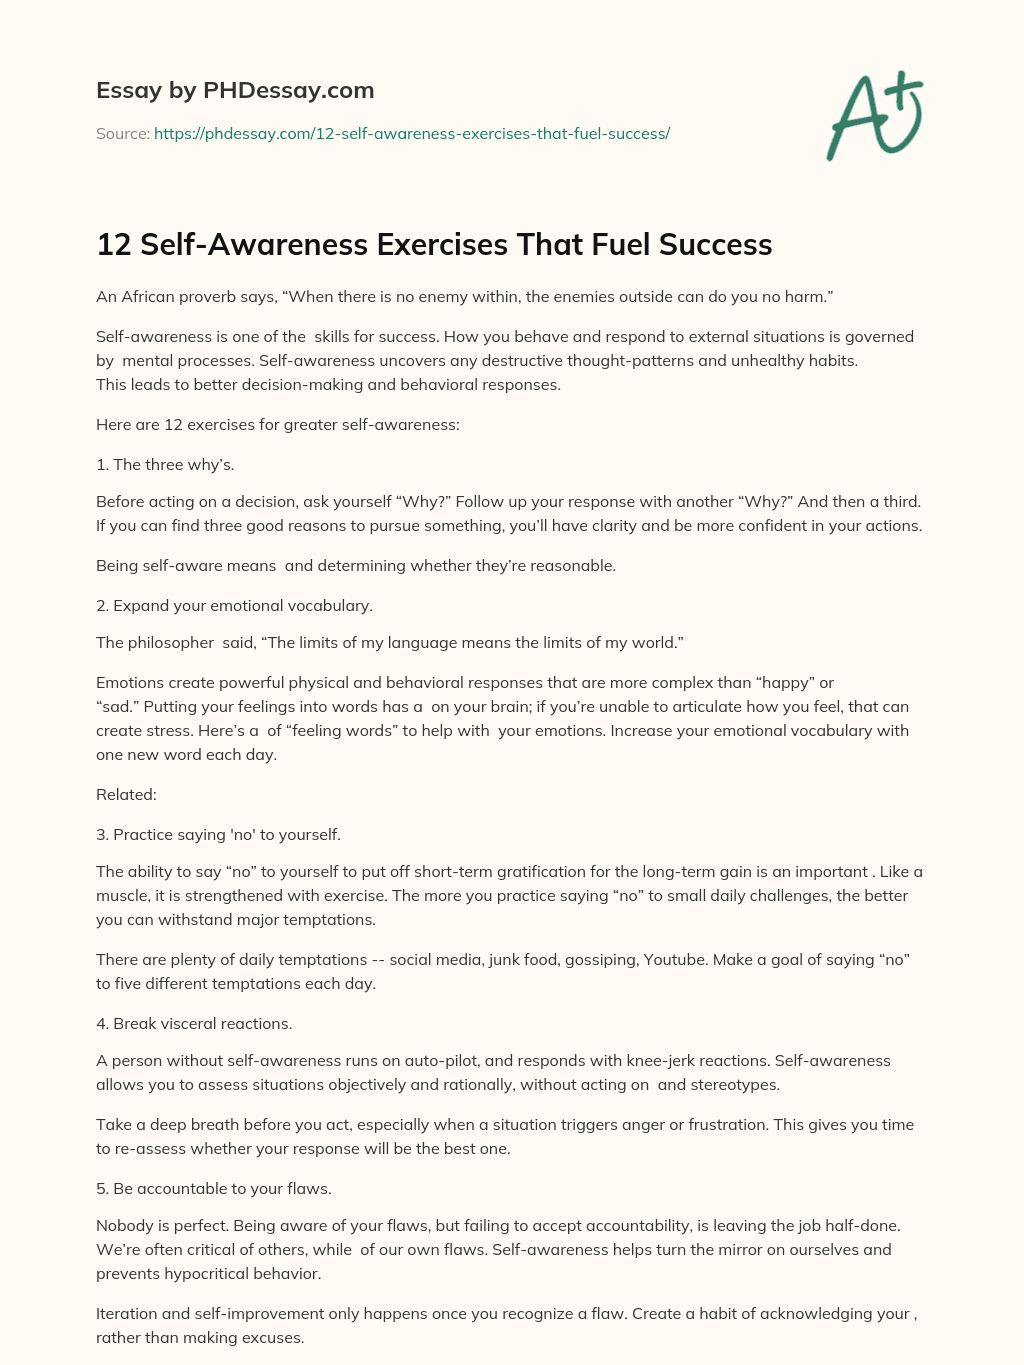 12 Self-Awareness Exercises That Fuel Success essay